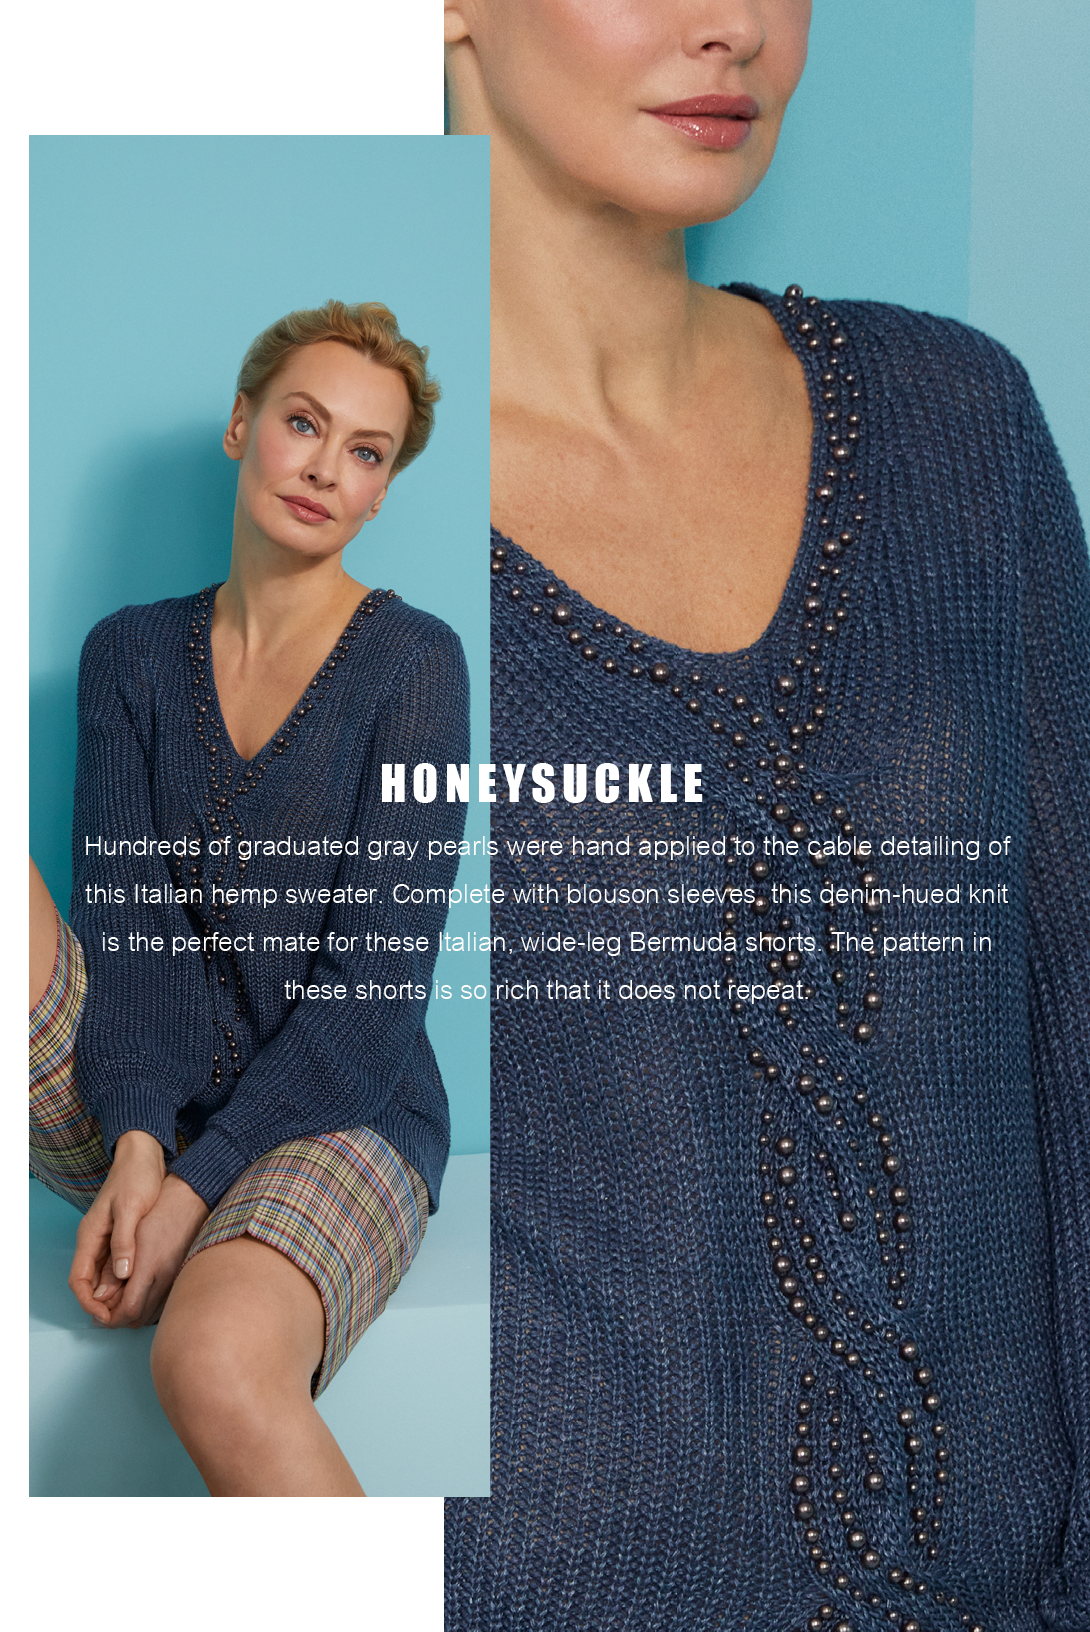 The Honeysuckle Sweater